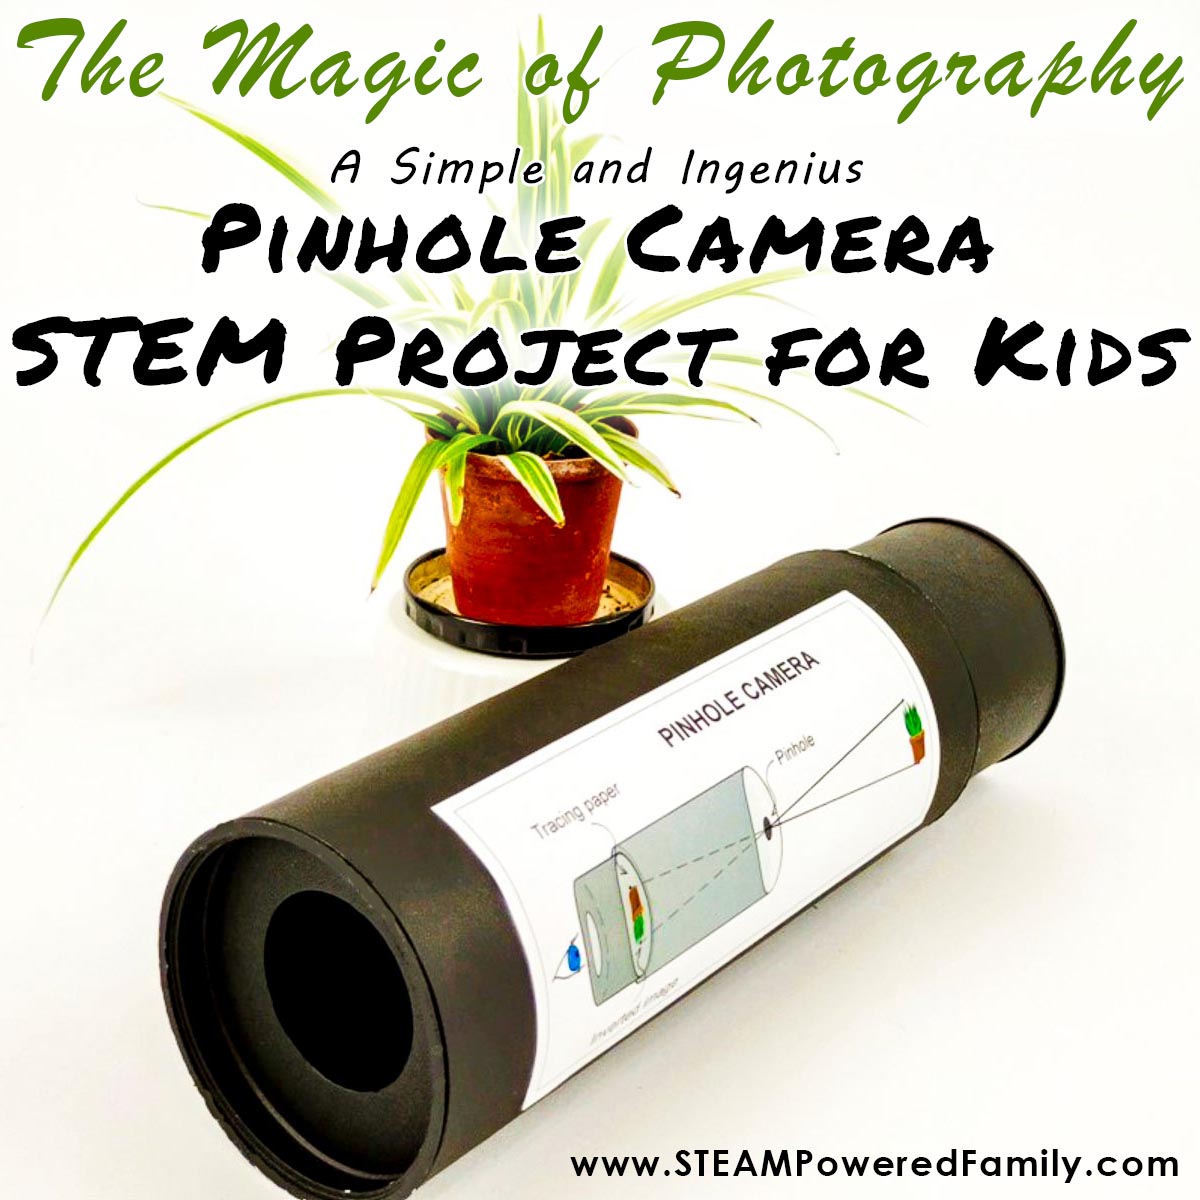 Pinhole Camera STEM Project